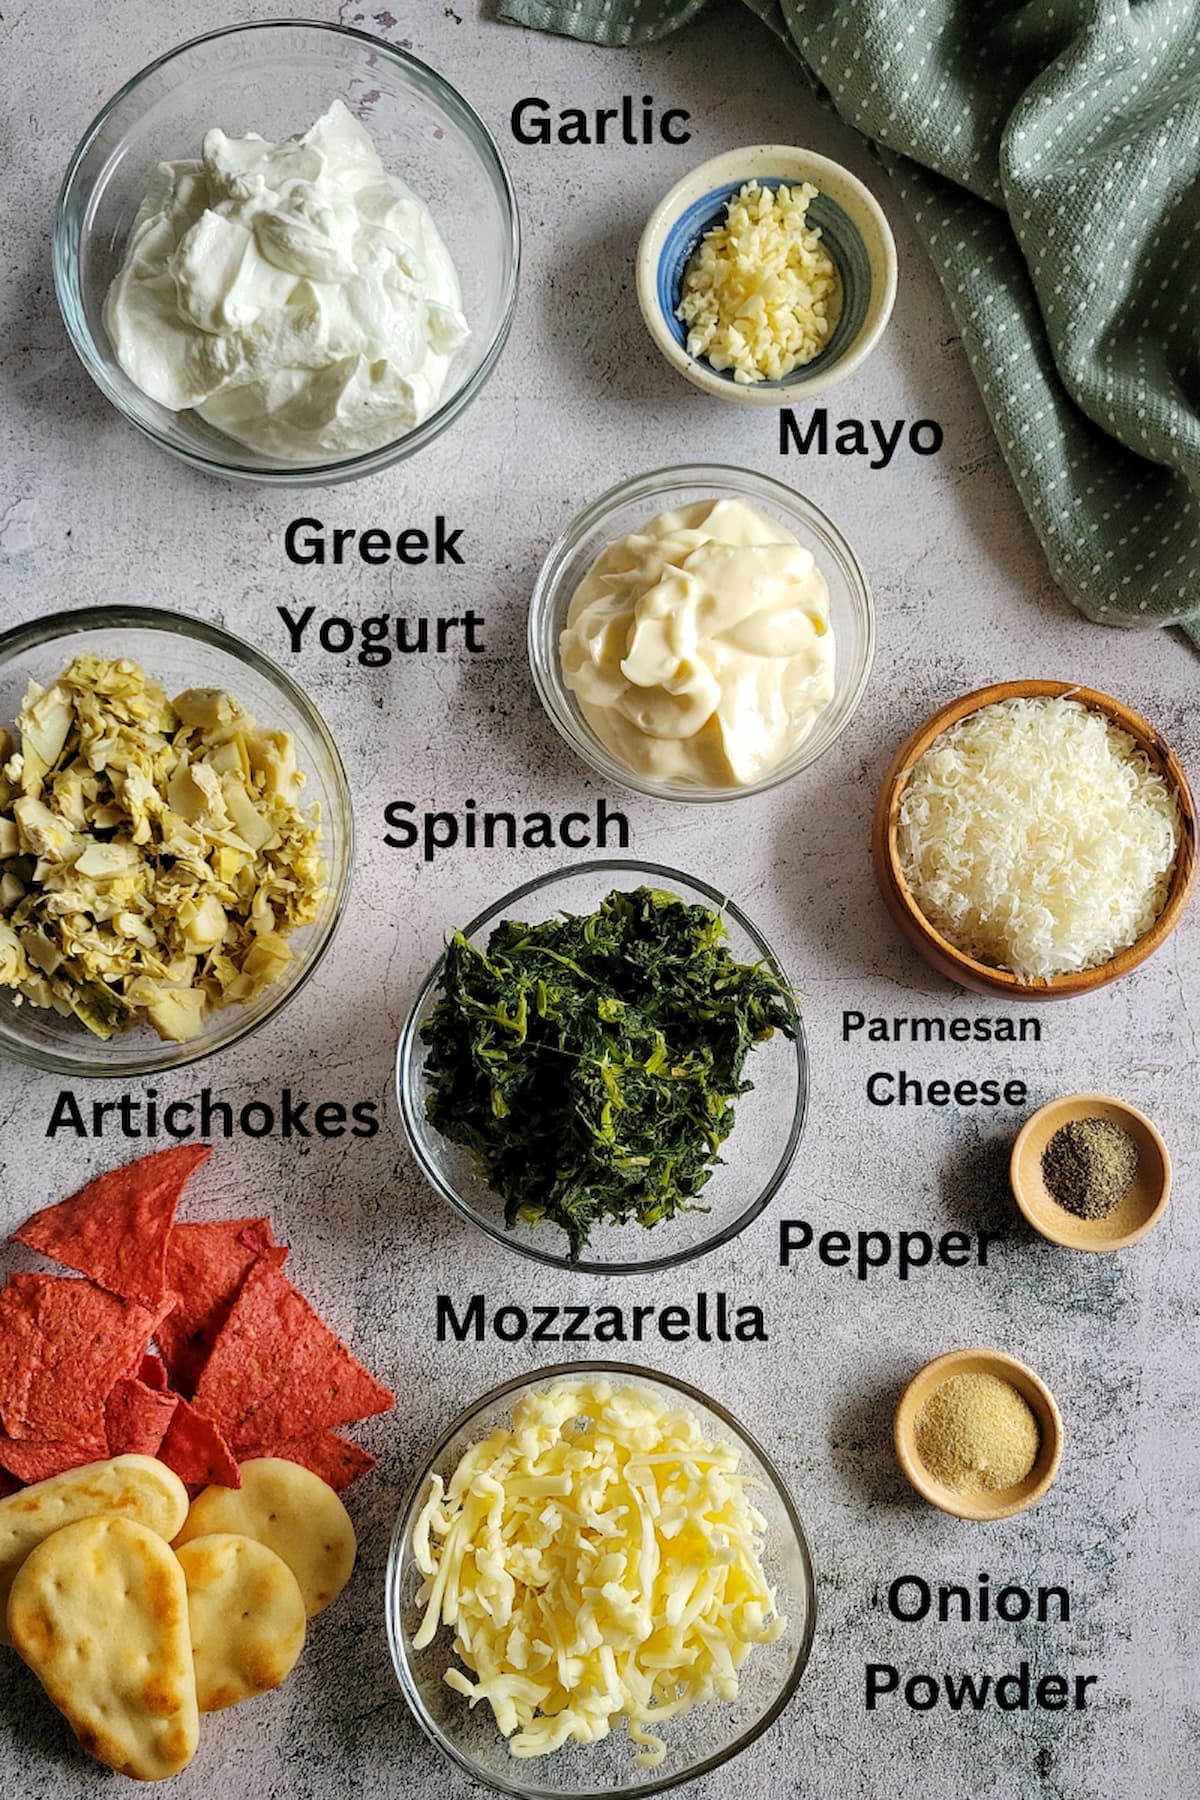 ingredients for spinach artichoke dip recipe - garlic, mayo, greek yogurt, spinach, artichokes, mozzarella, parmesan cheese, pepper, onion powder, tortilla chips, pita bread